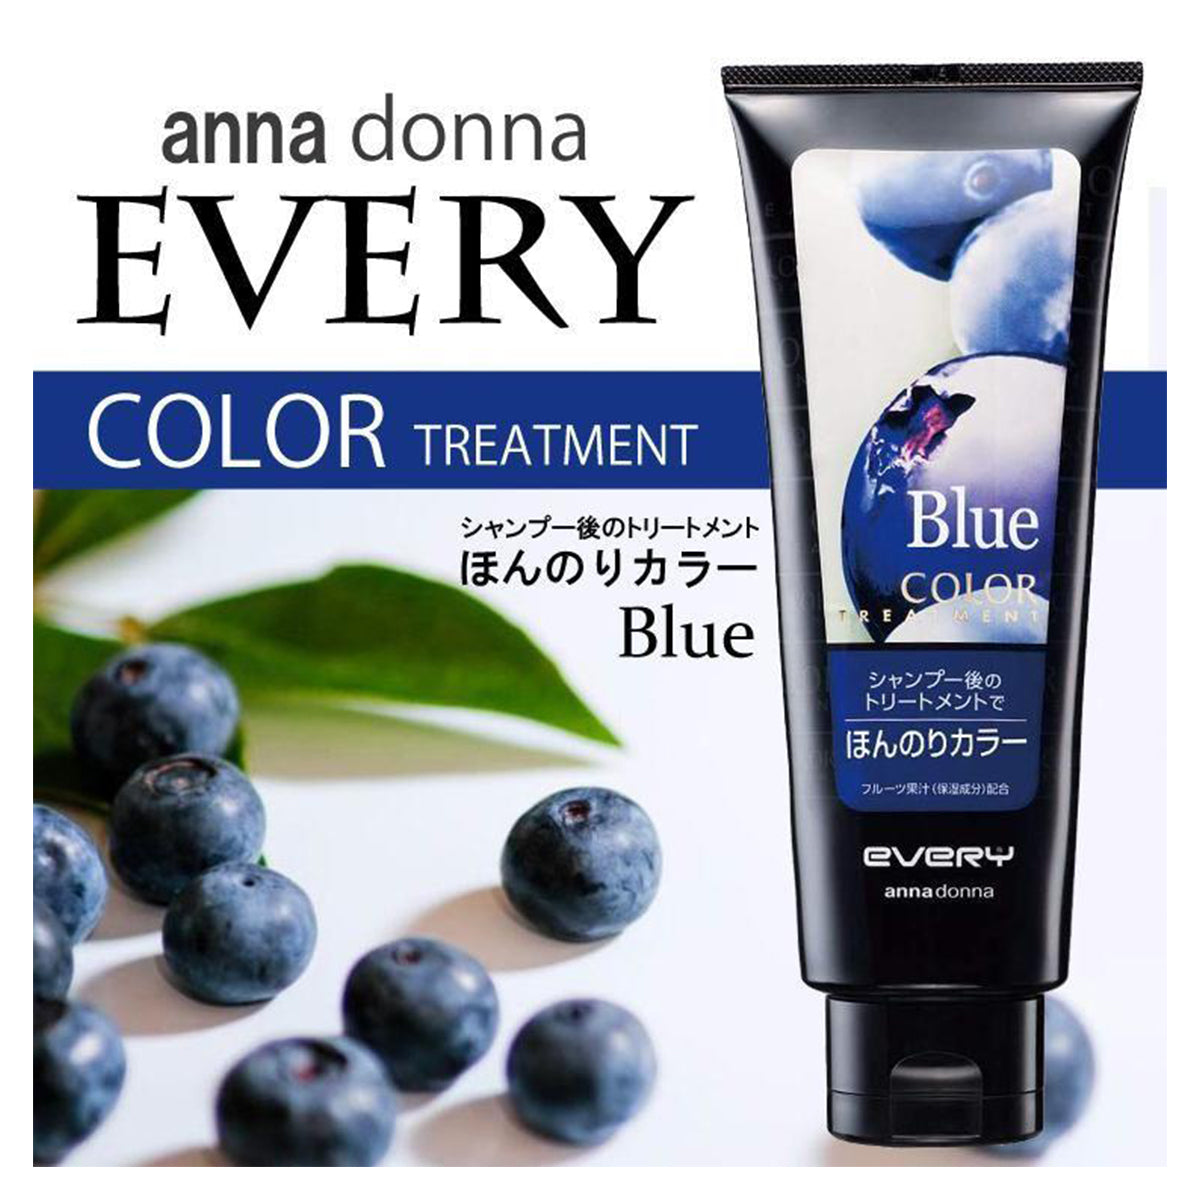 Anna Donna Every Color Treatment #Blue 160g